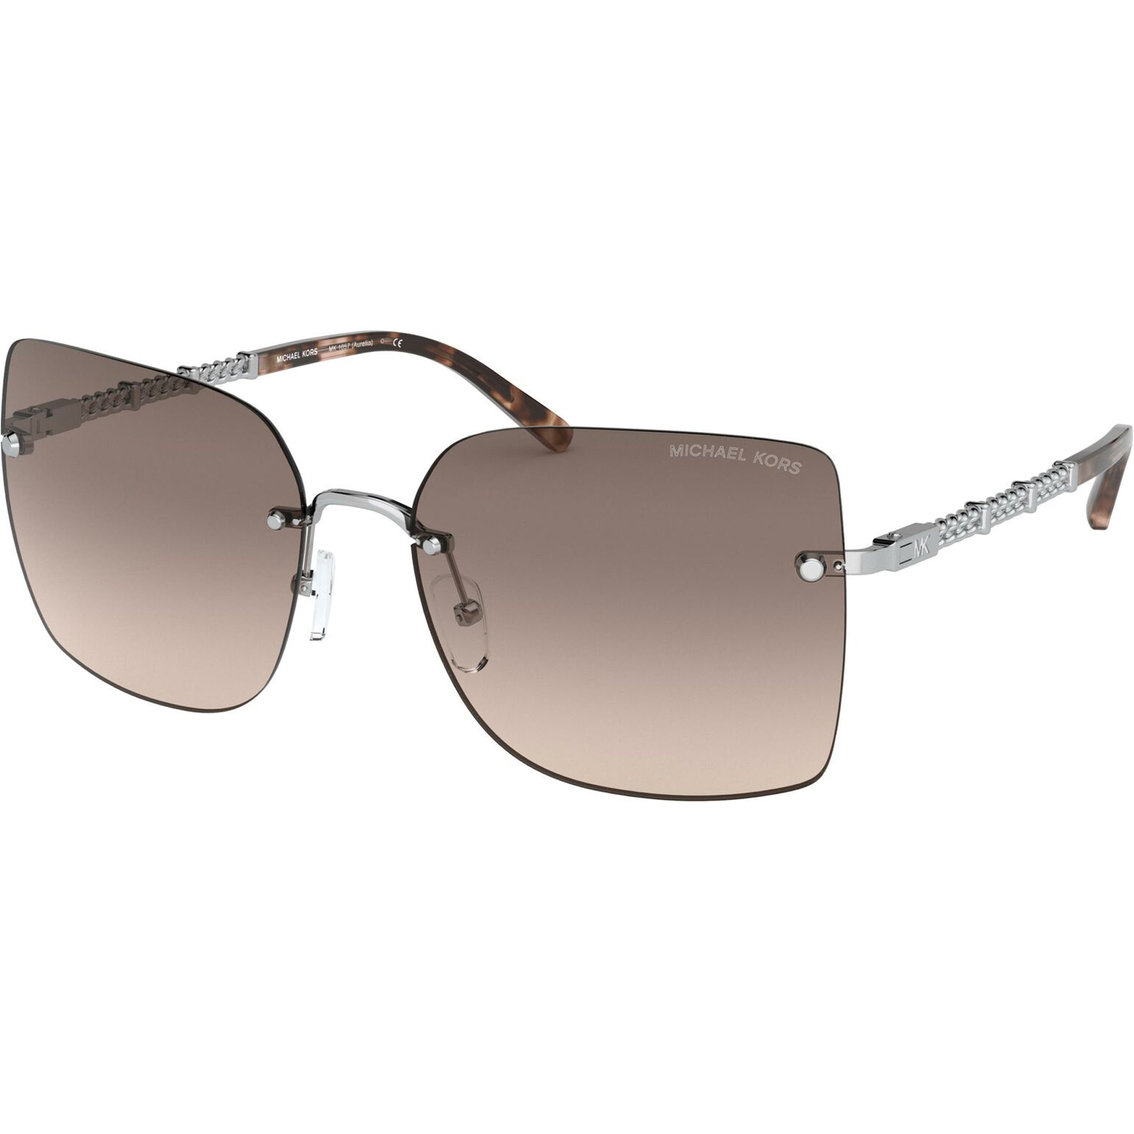 Michael Kors Square Sunglasses 0mk1057 